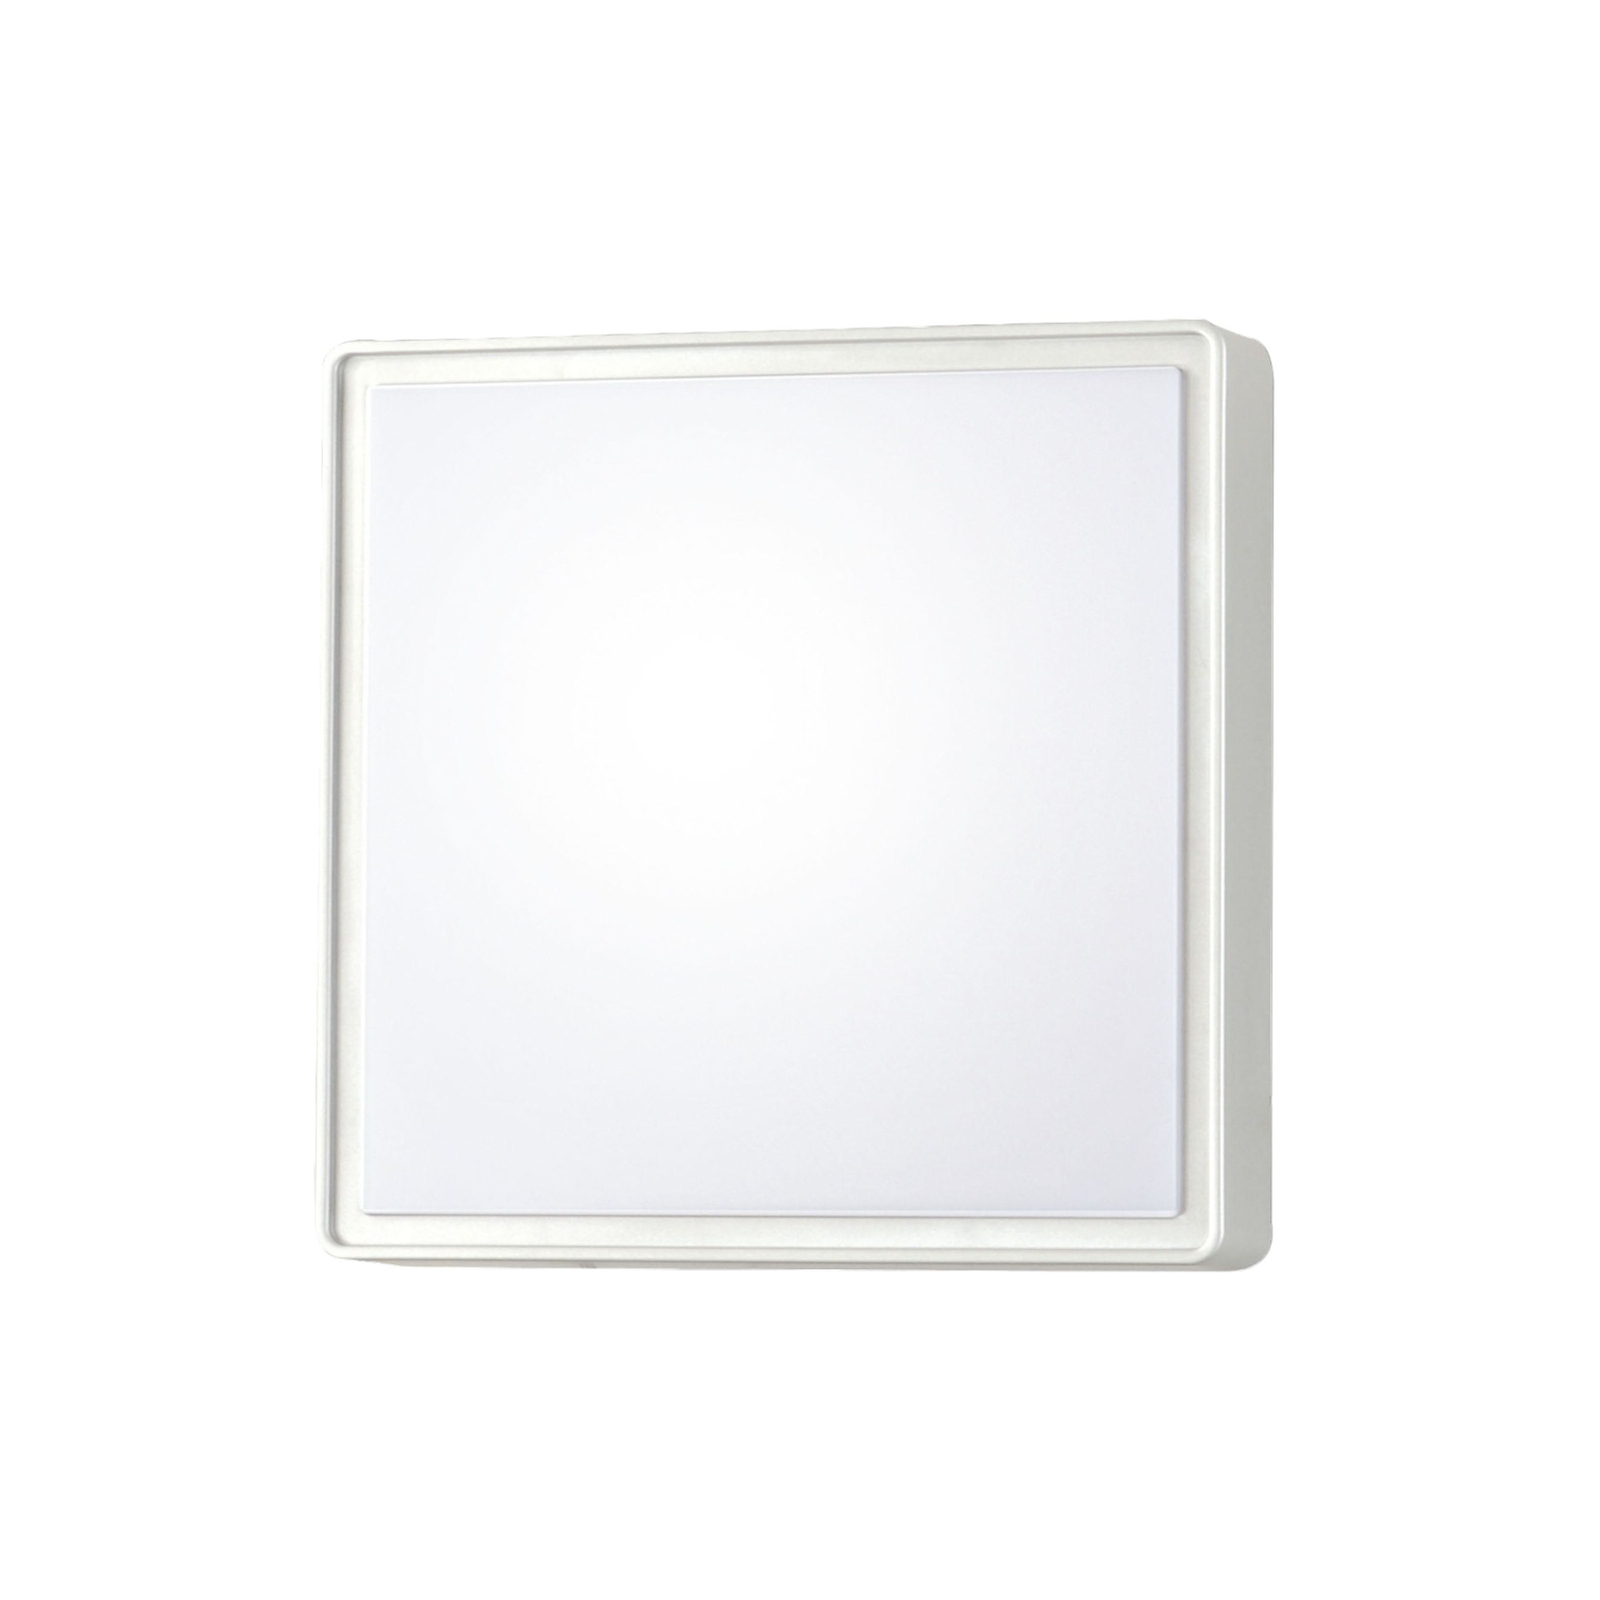 Oban LED sienas lampa, 30 cm x 30 cm, balta, IP65